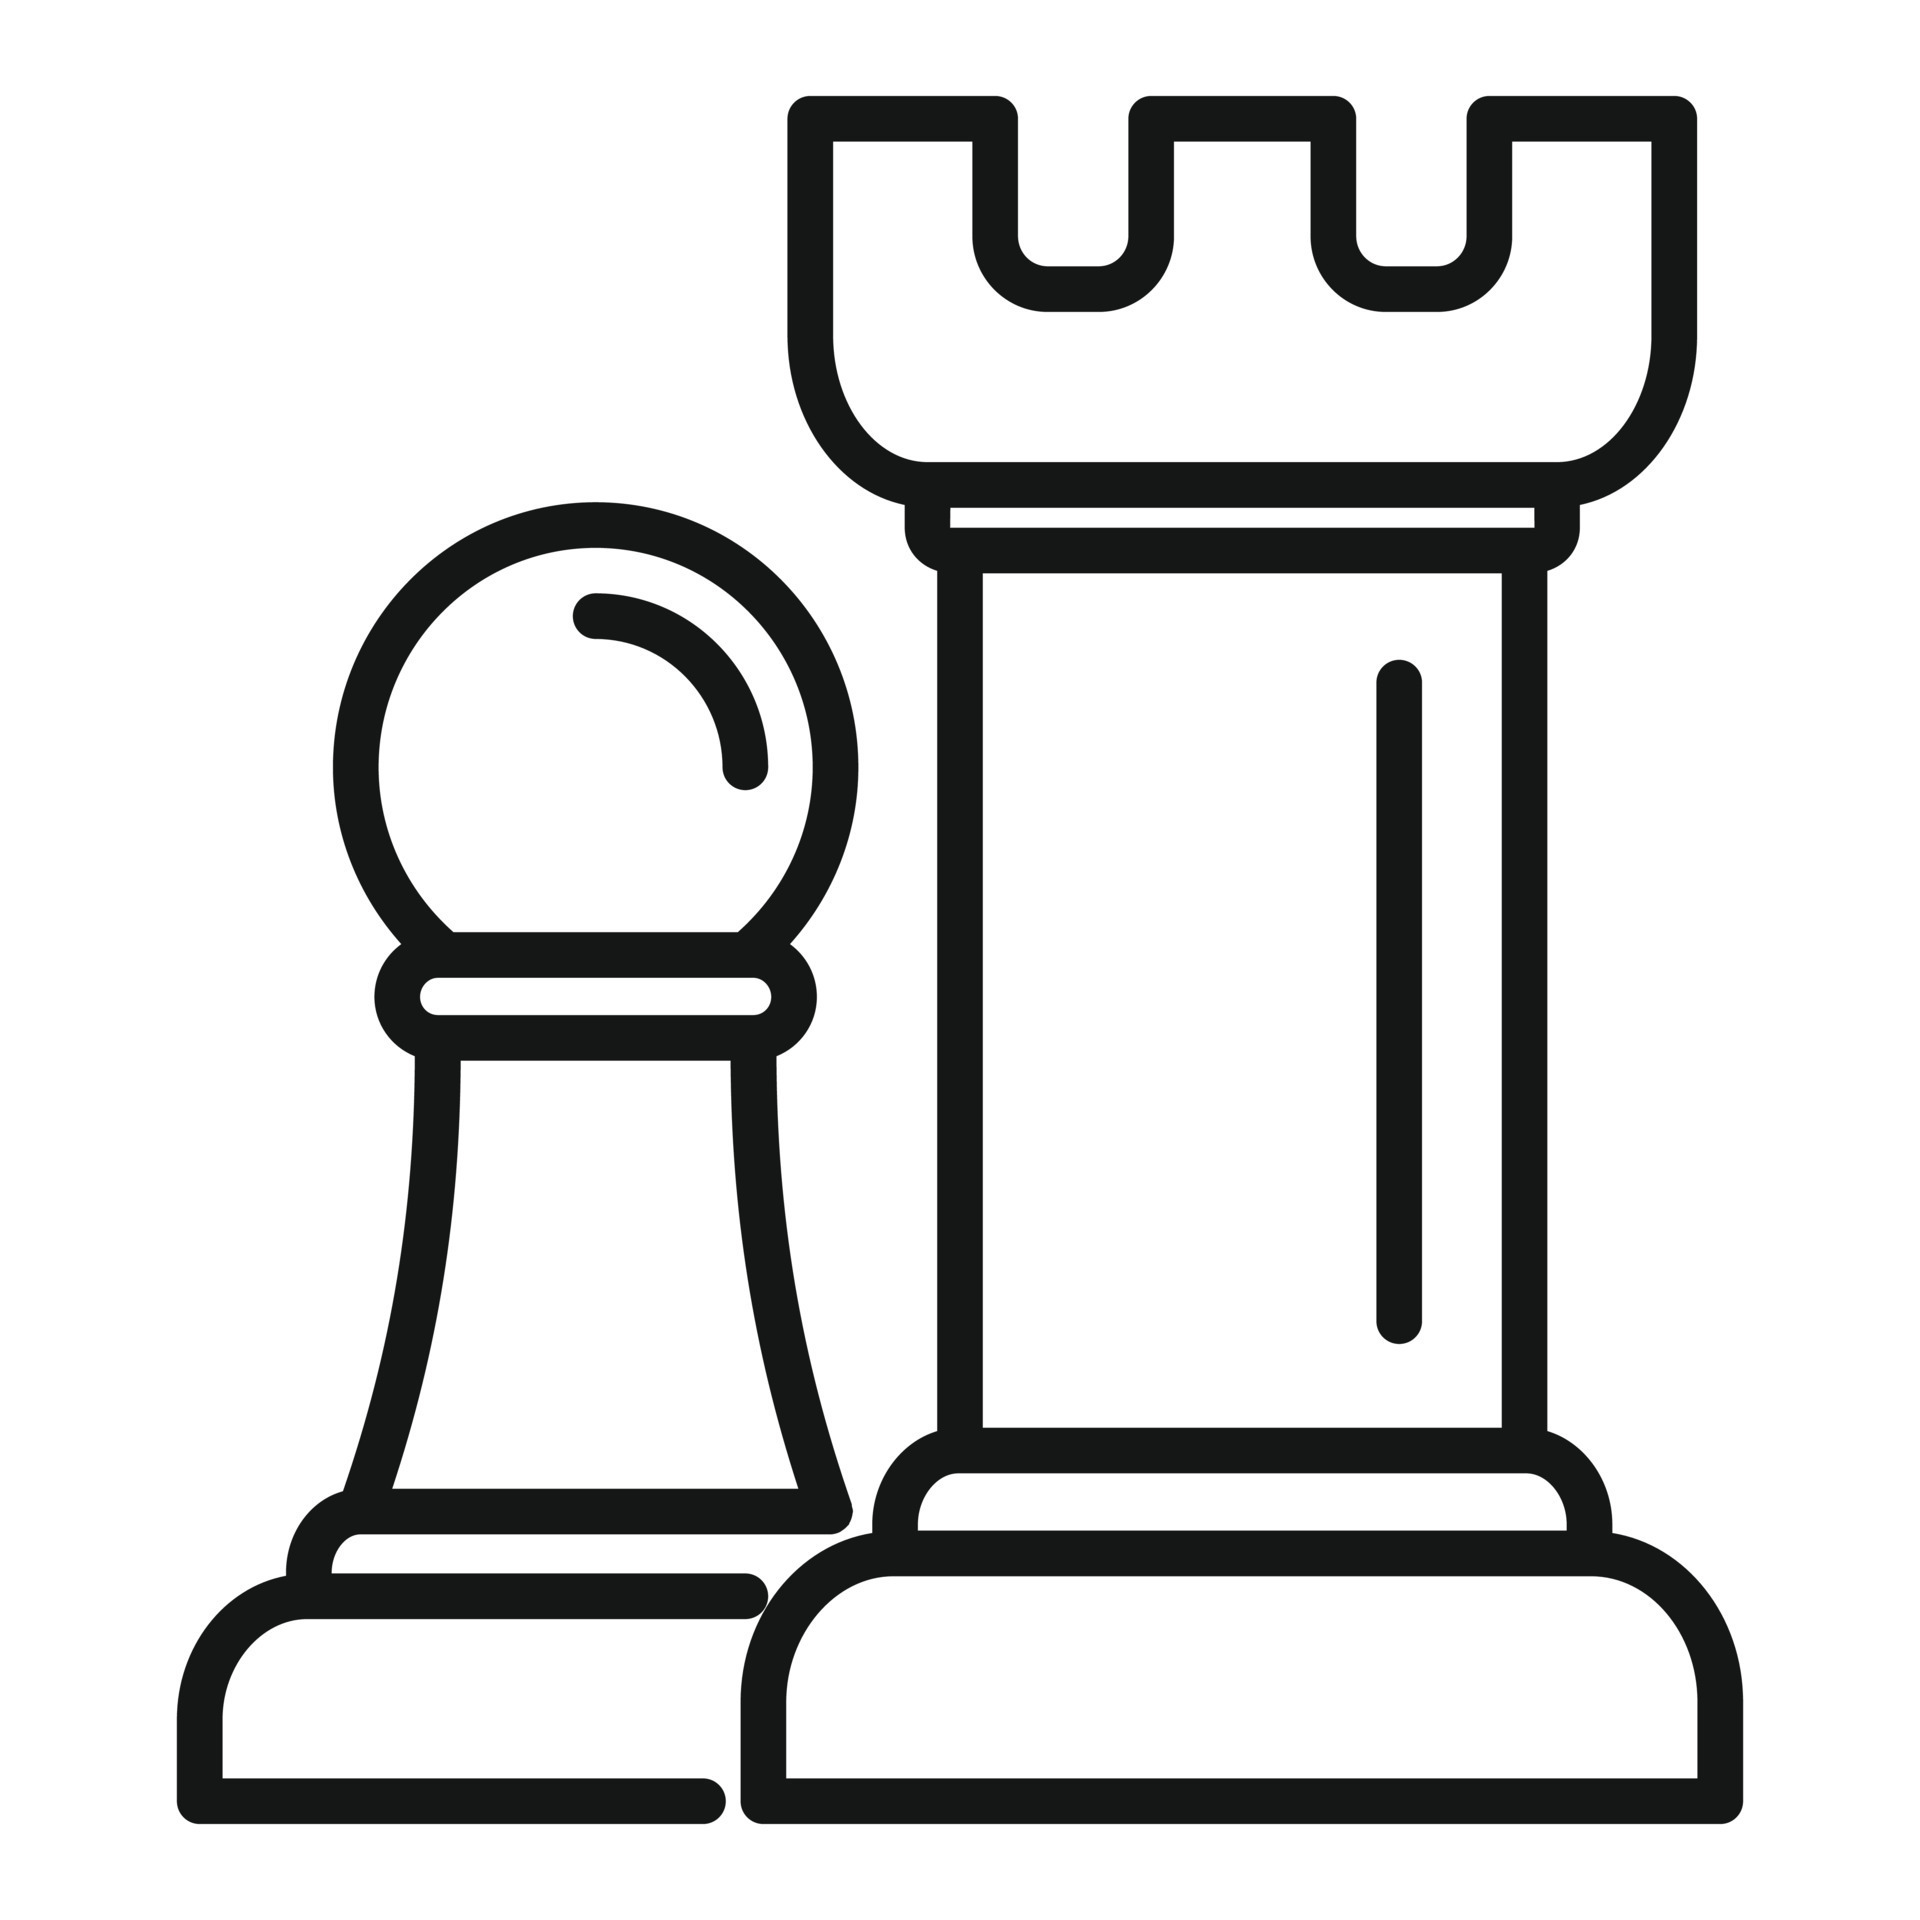 Xadrez - ícones de jogos grátis